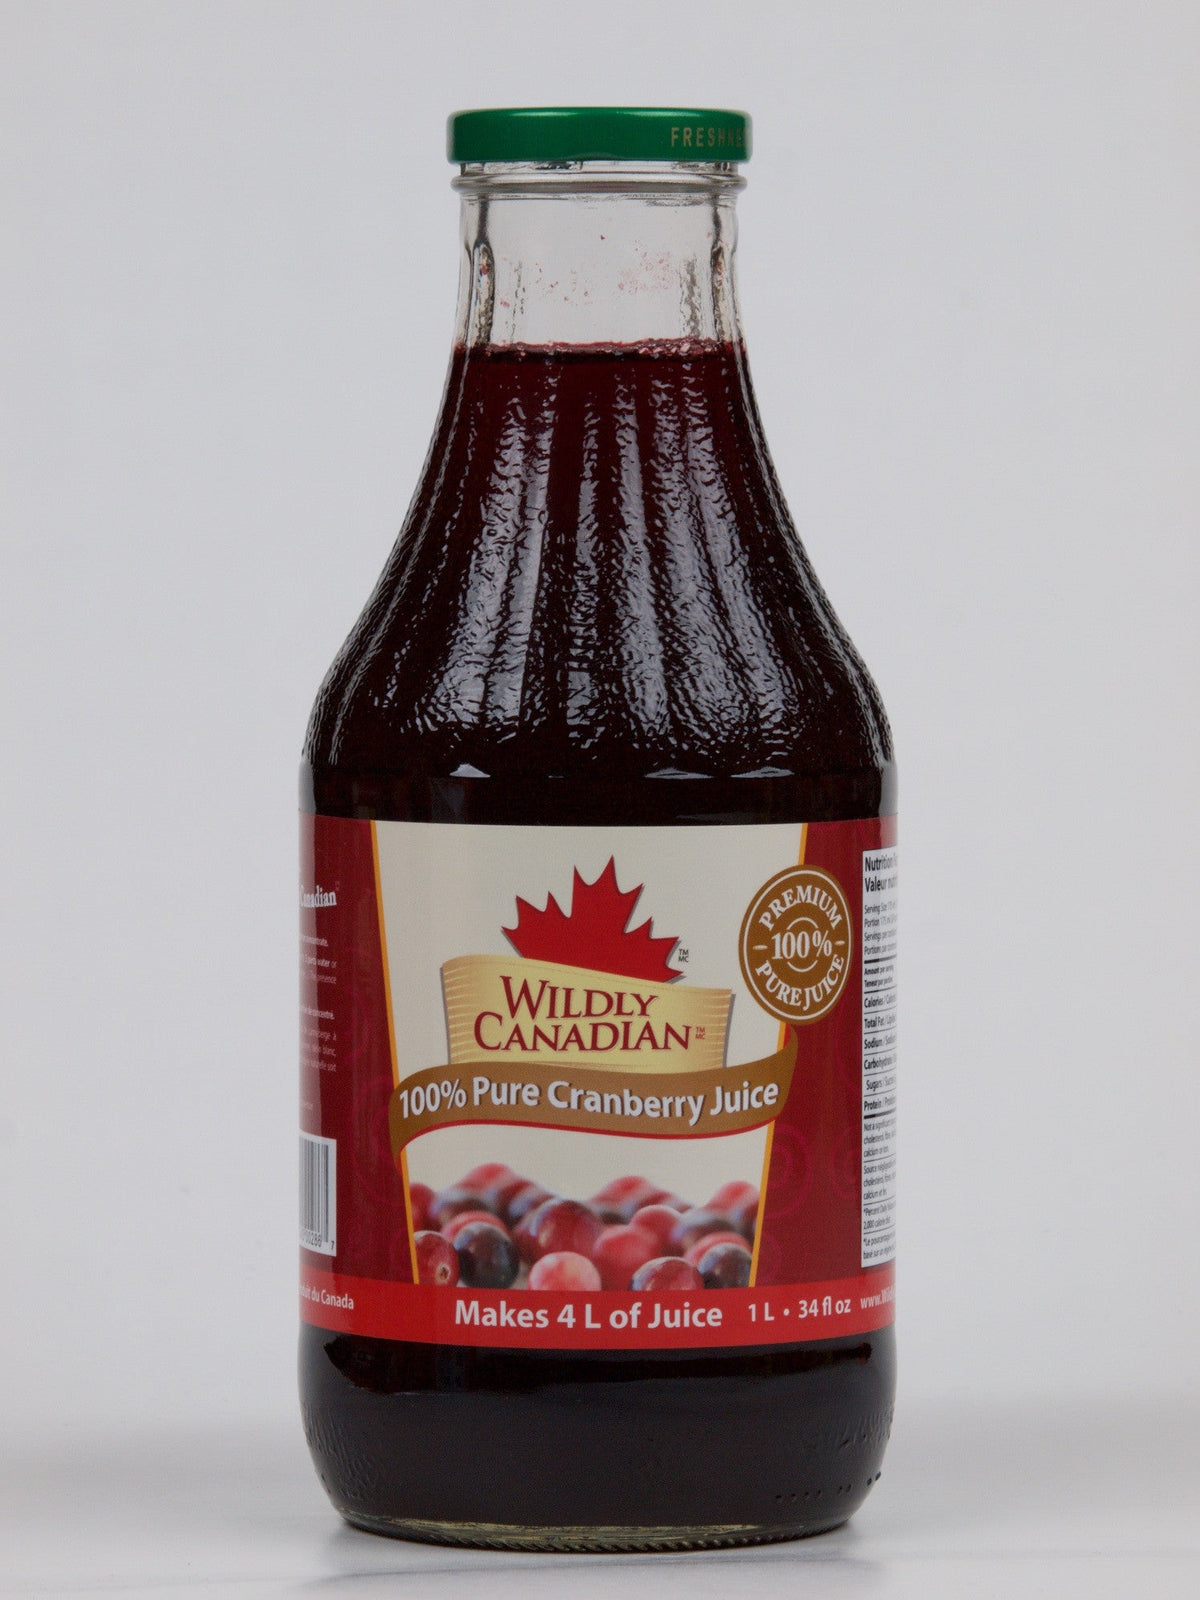 100% Pure Cranberry Juice (Makes 4L of Juice)